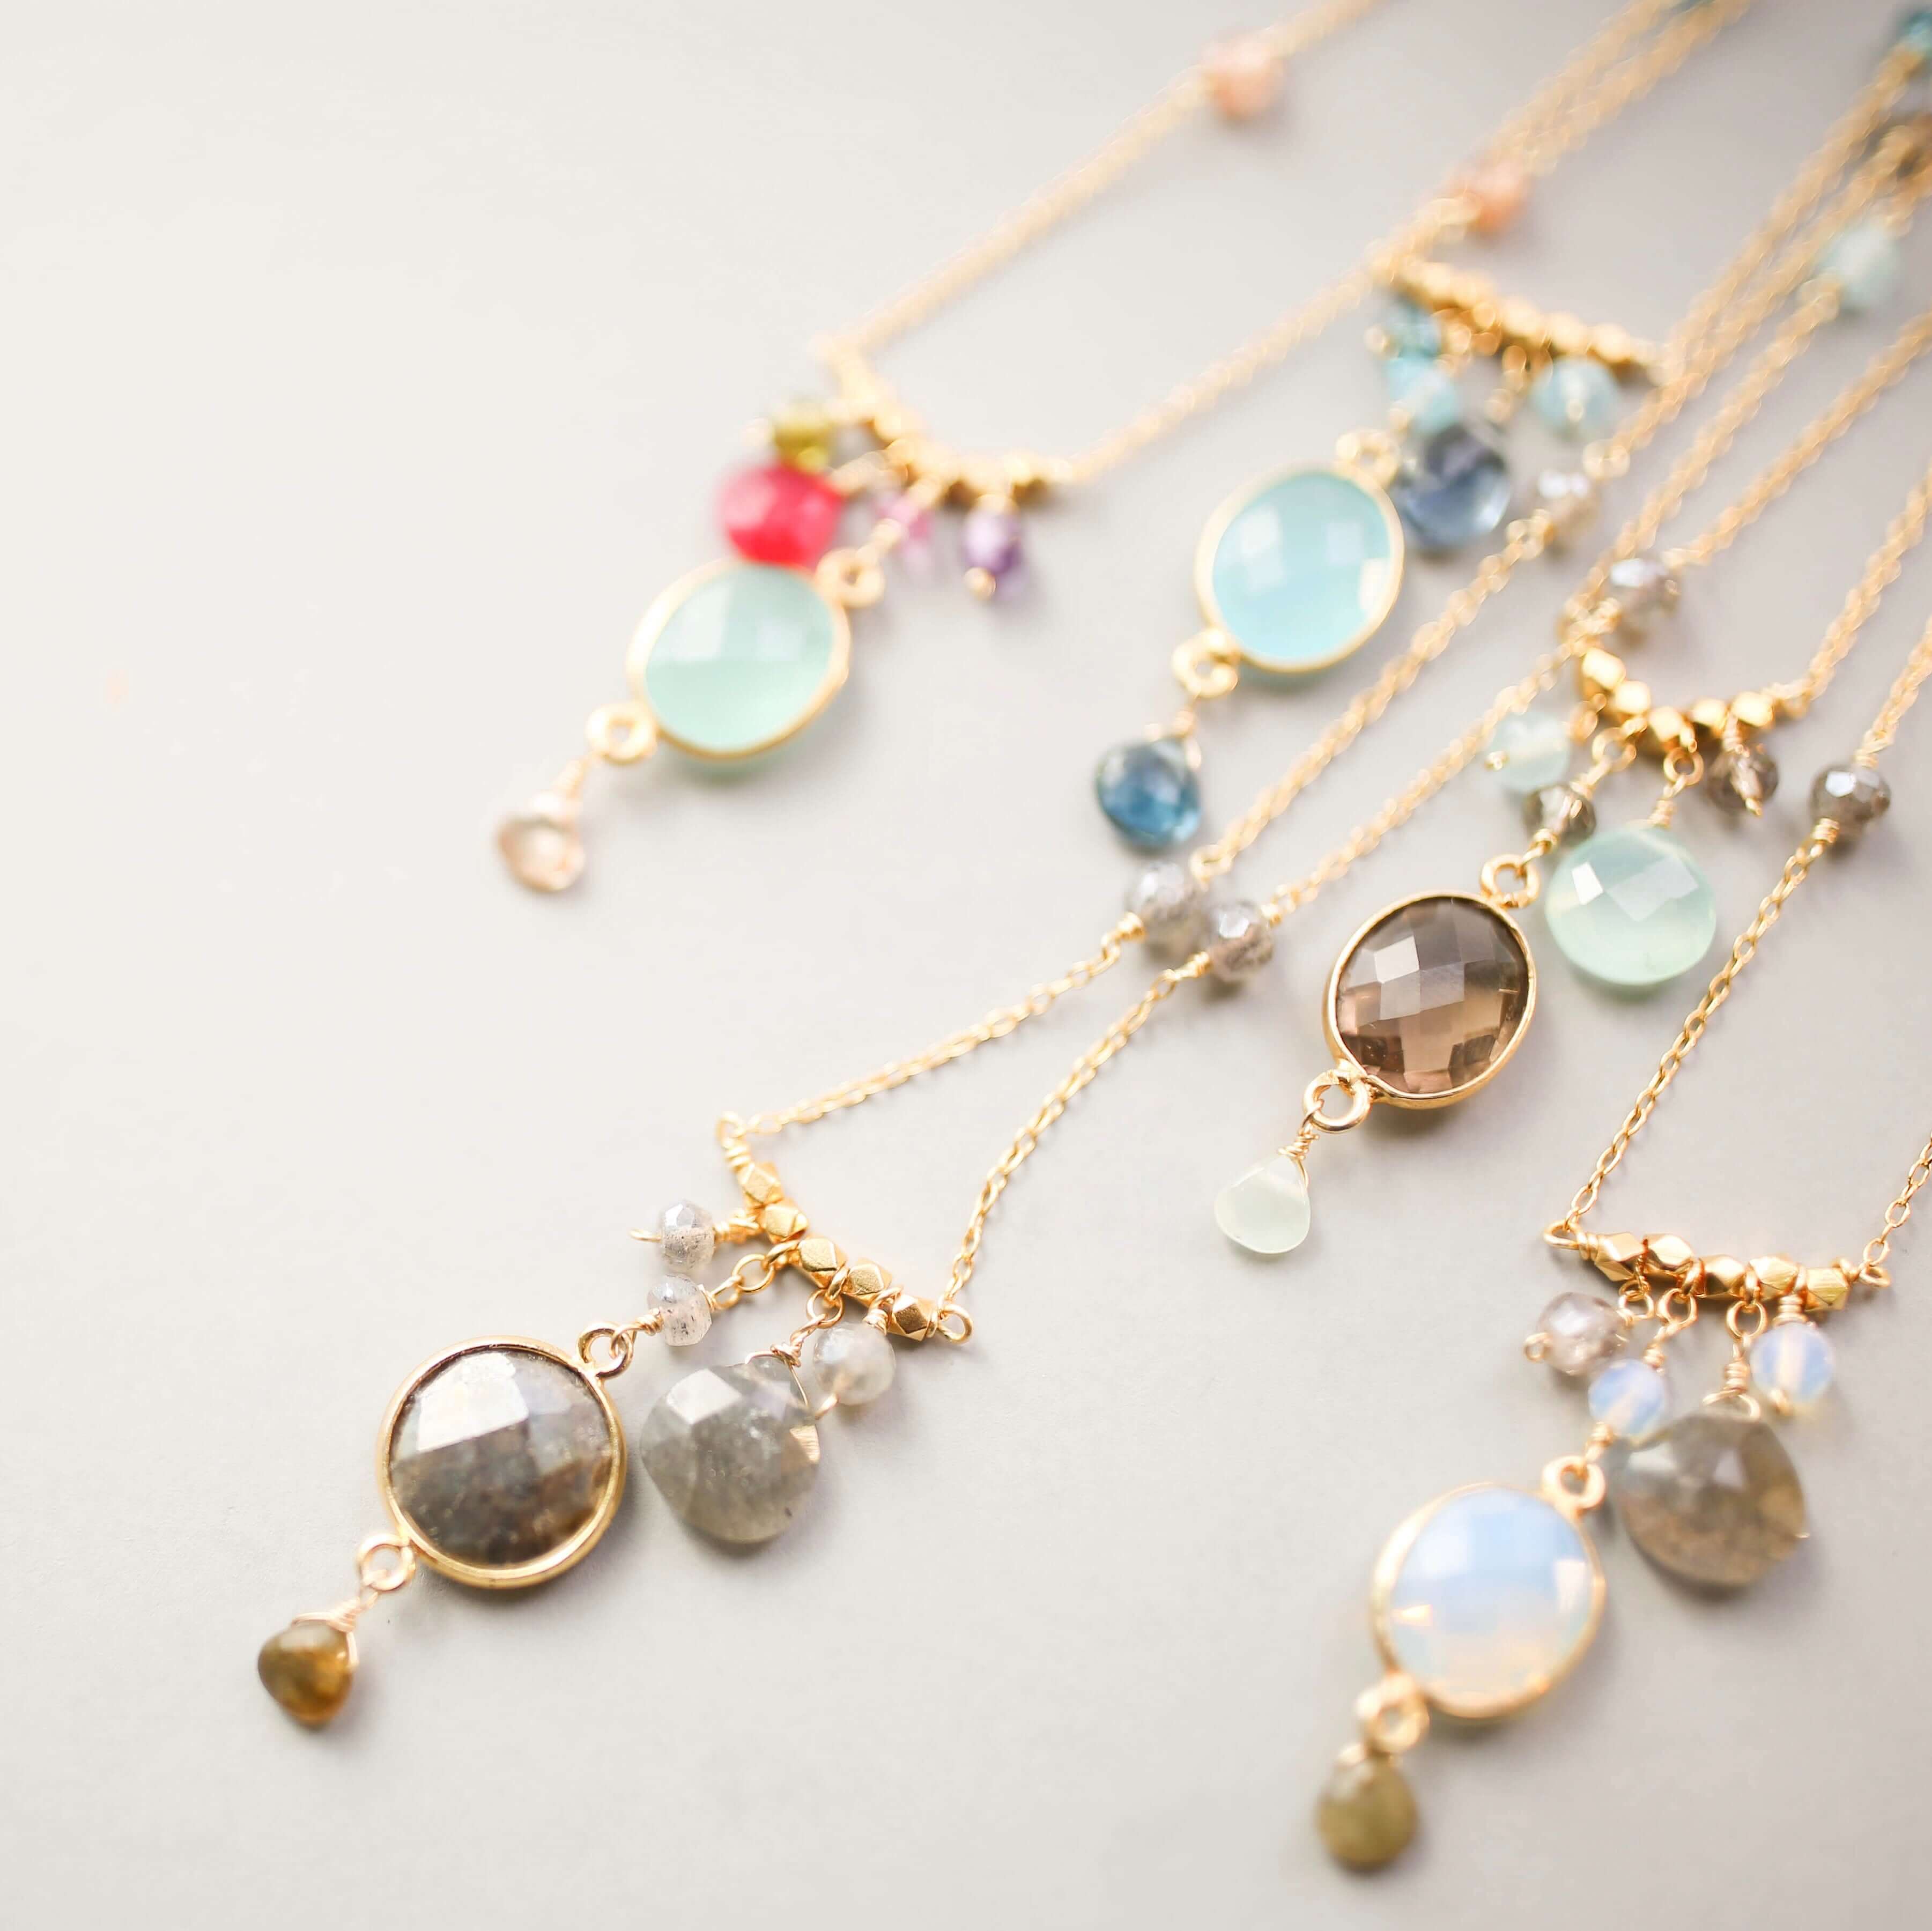 Colorful Gemstone Pendant Necklaces